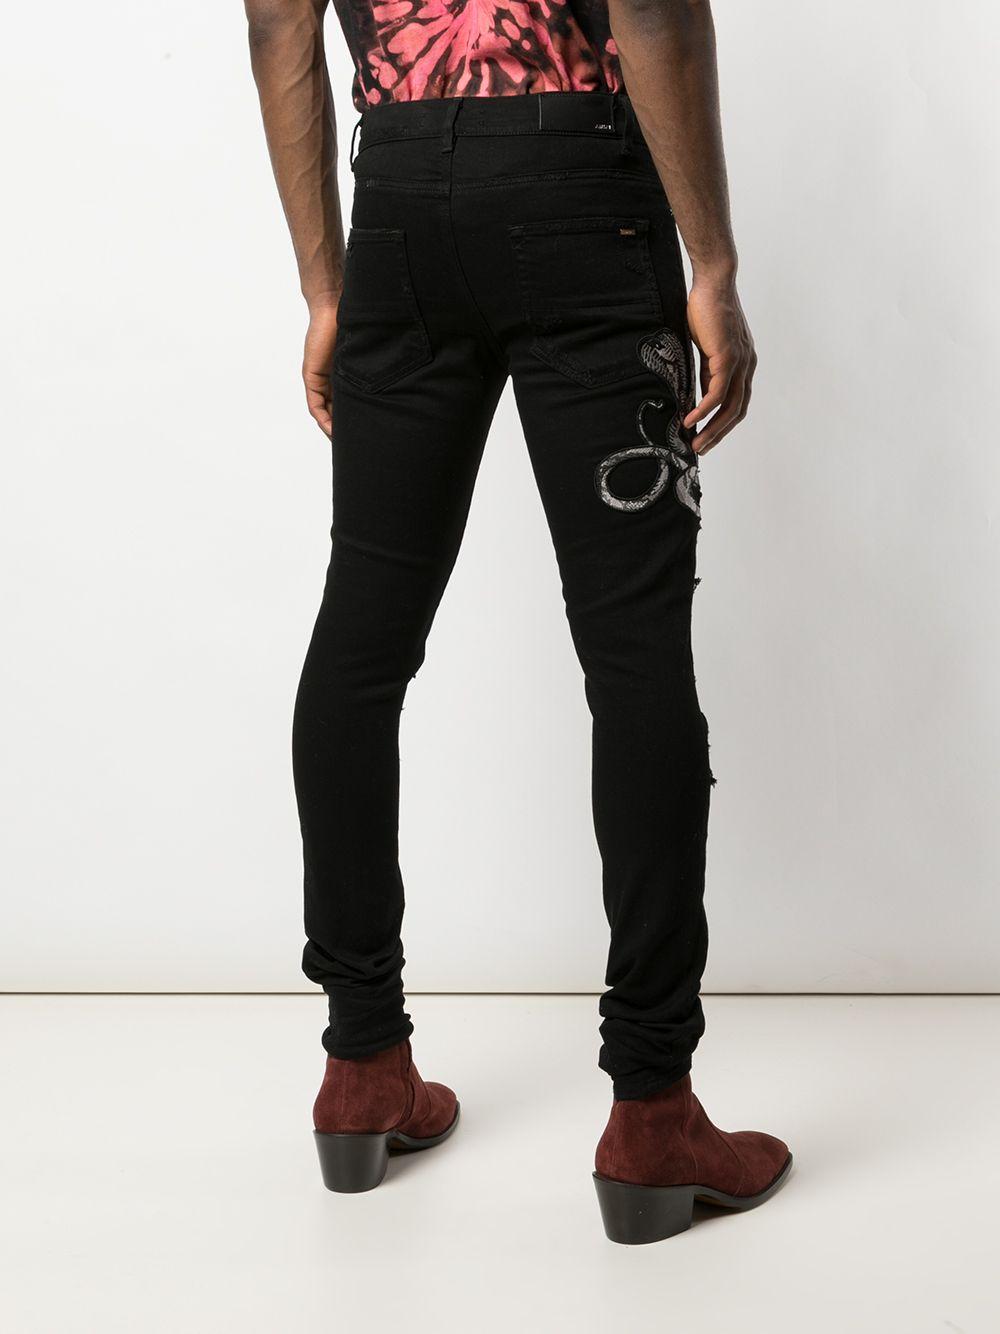 Amiri Denim Snake Patch Jeans in Black for Men - Lyst